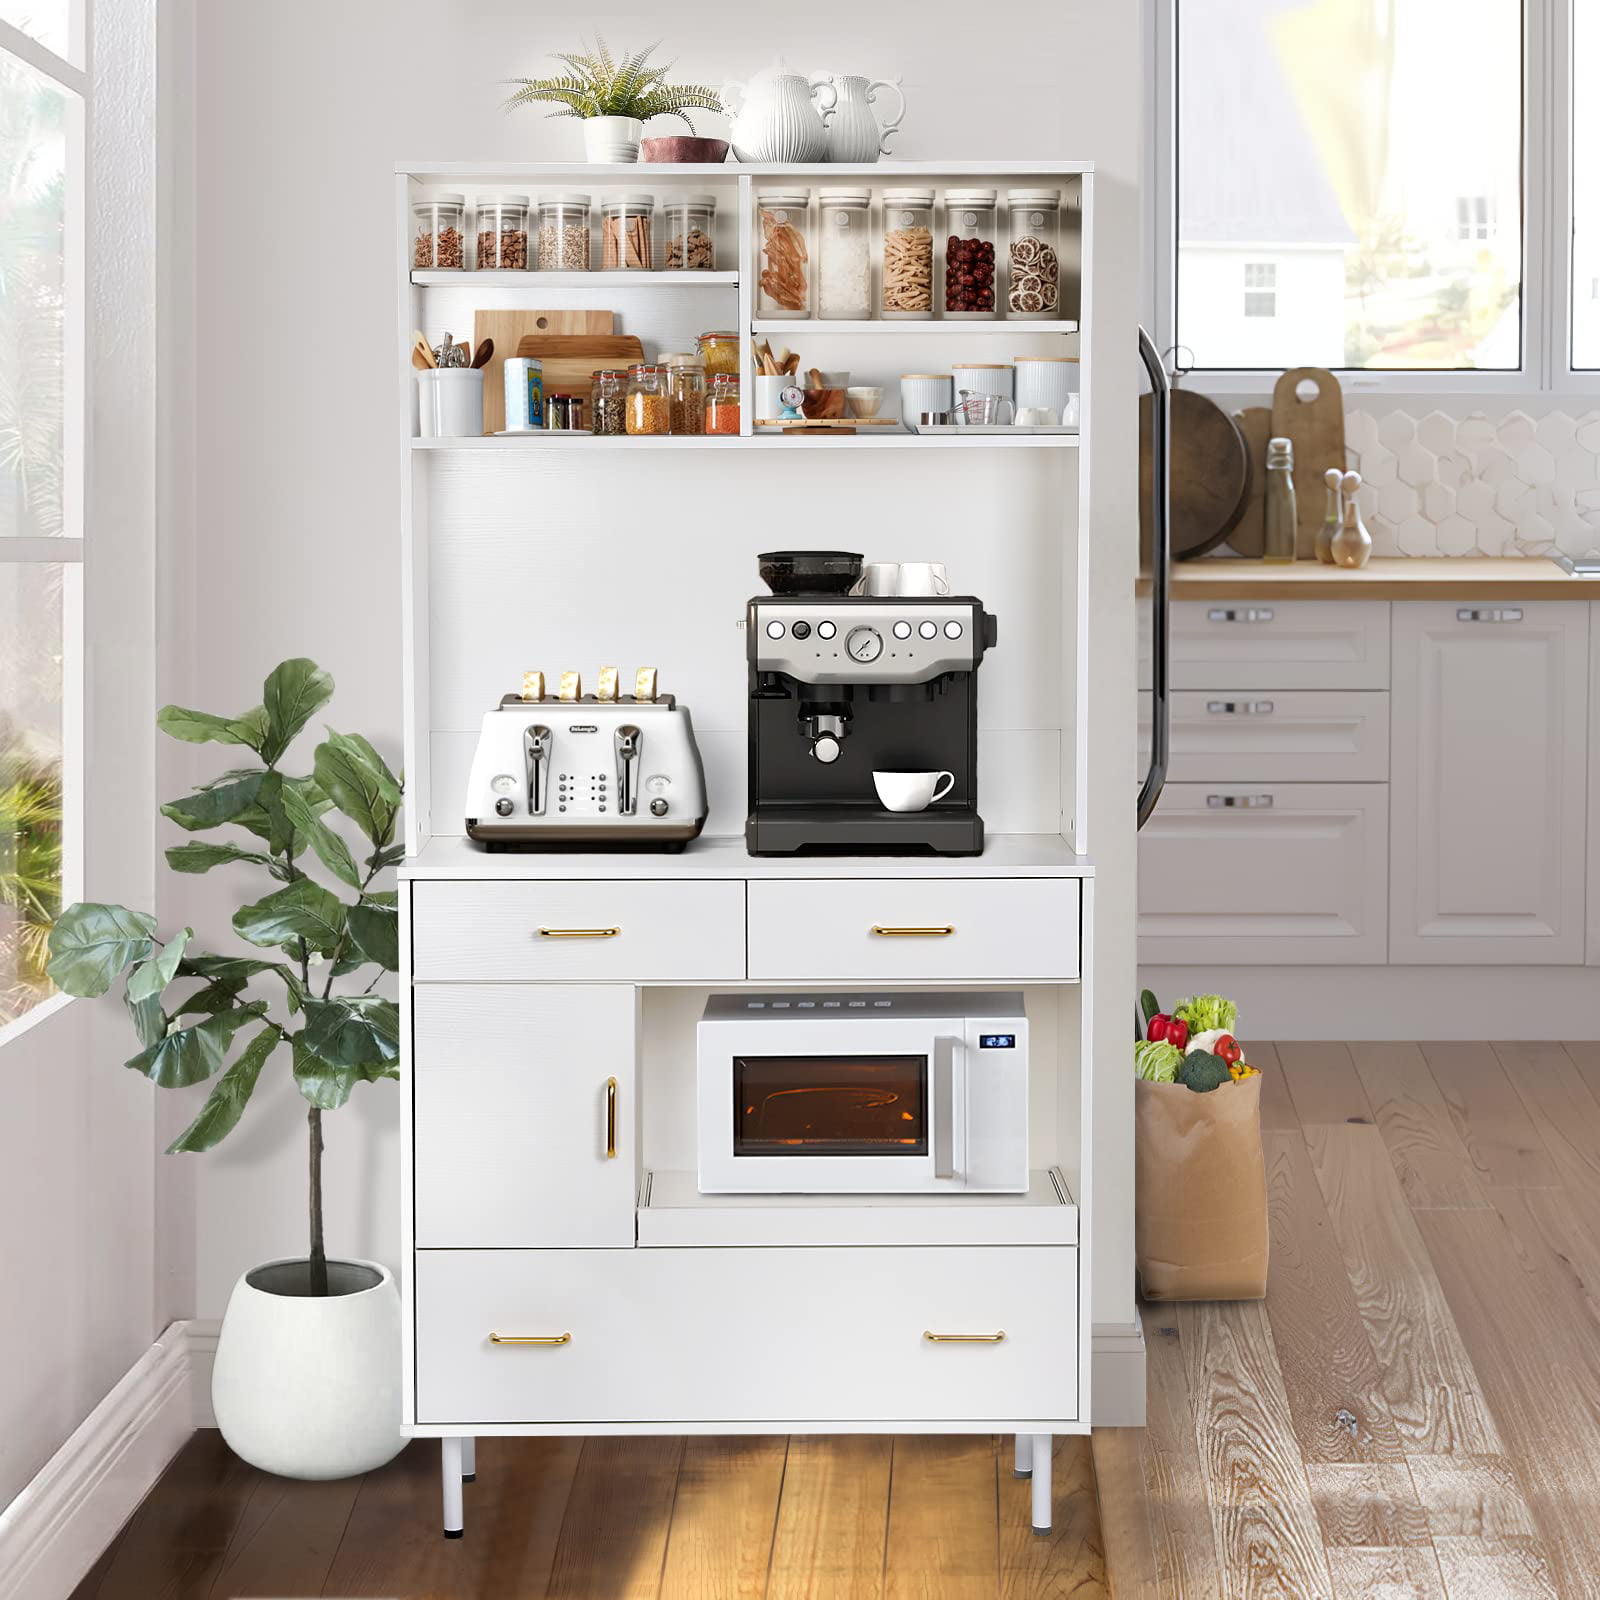 SMOOL Kitchen Pantry Storage Cabinet, 71'' Freestanding Kitchen Storage Cabinets with 3 Drawers, White - 1